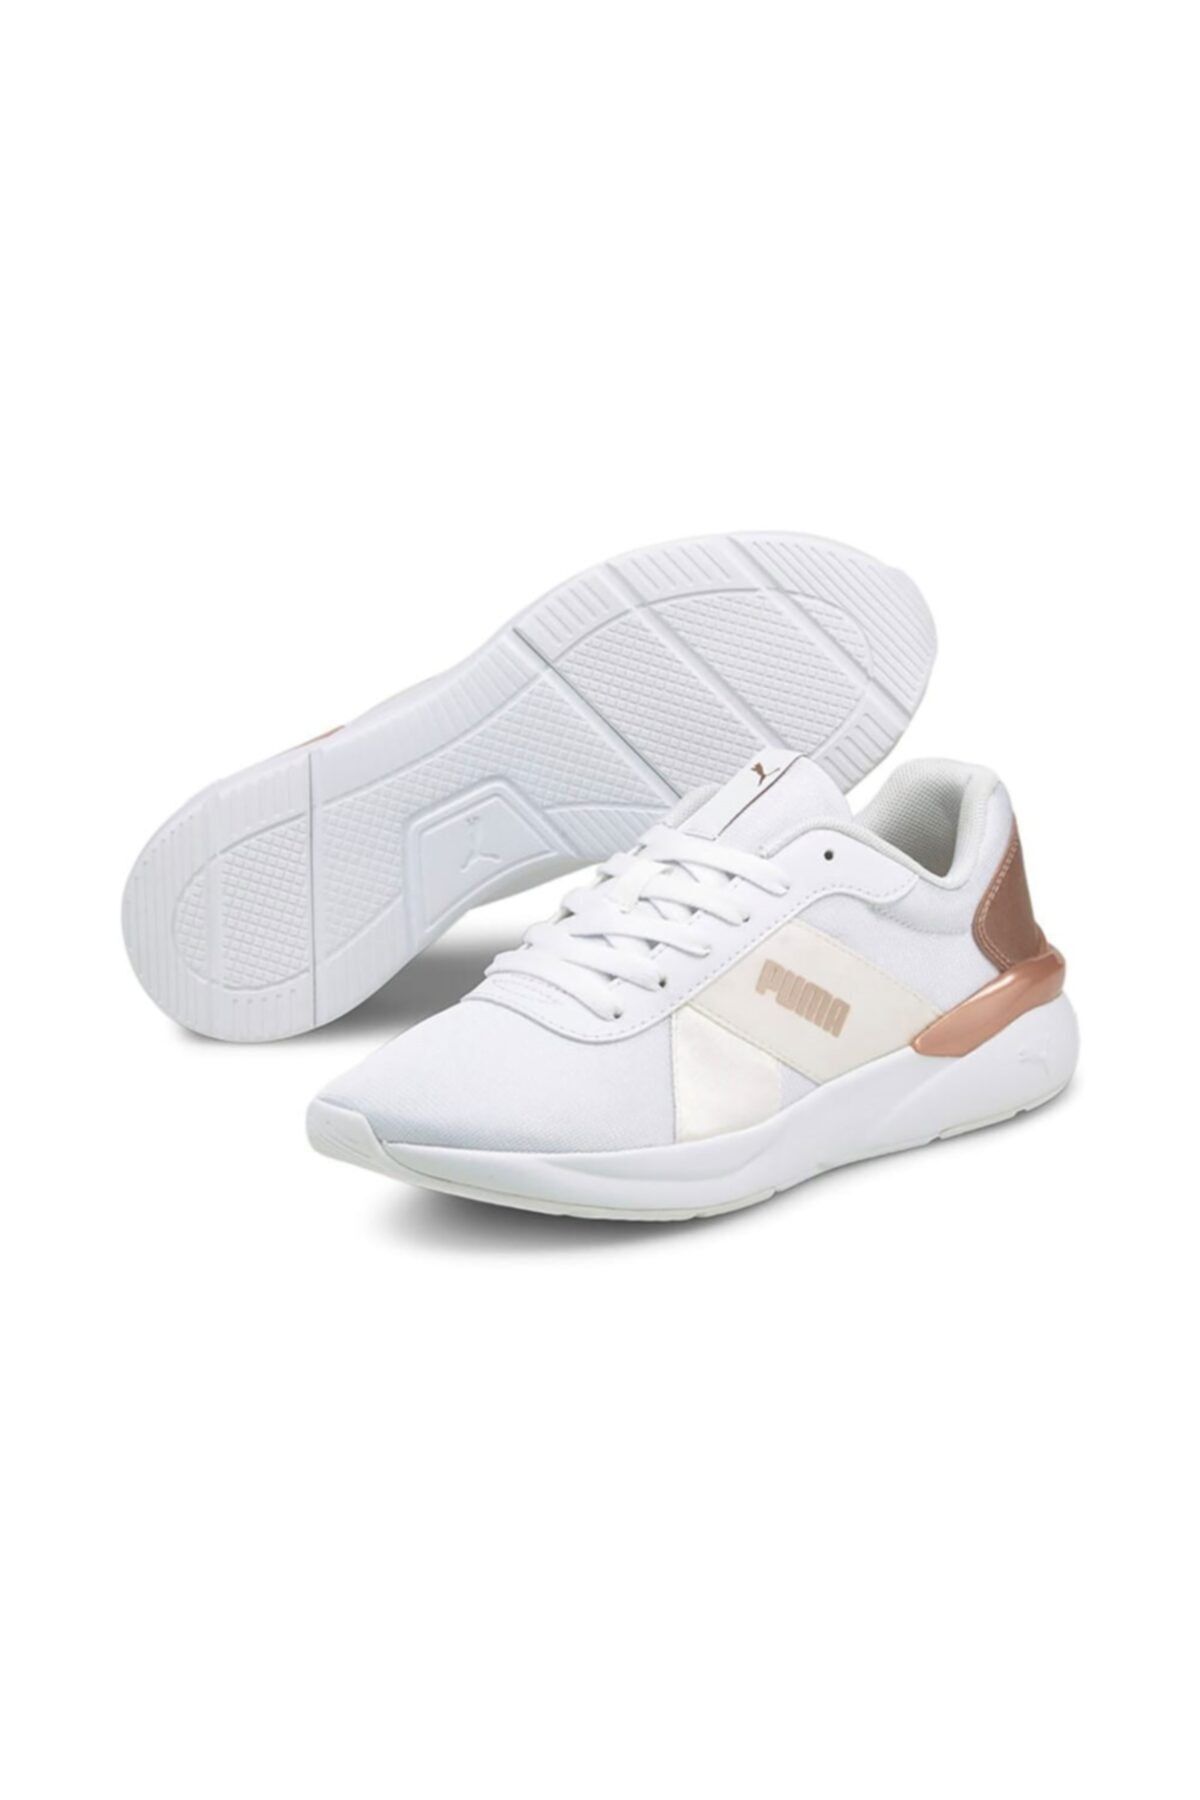 Puma Kadın Sneaker - Rose Metallic Pop White-Rose Gold - 38108003